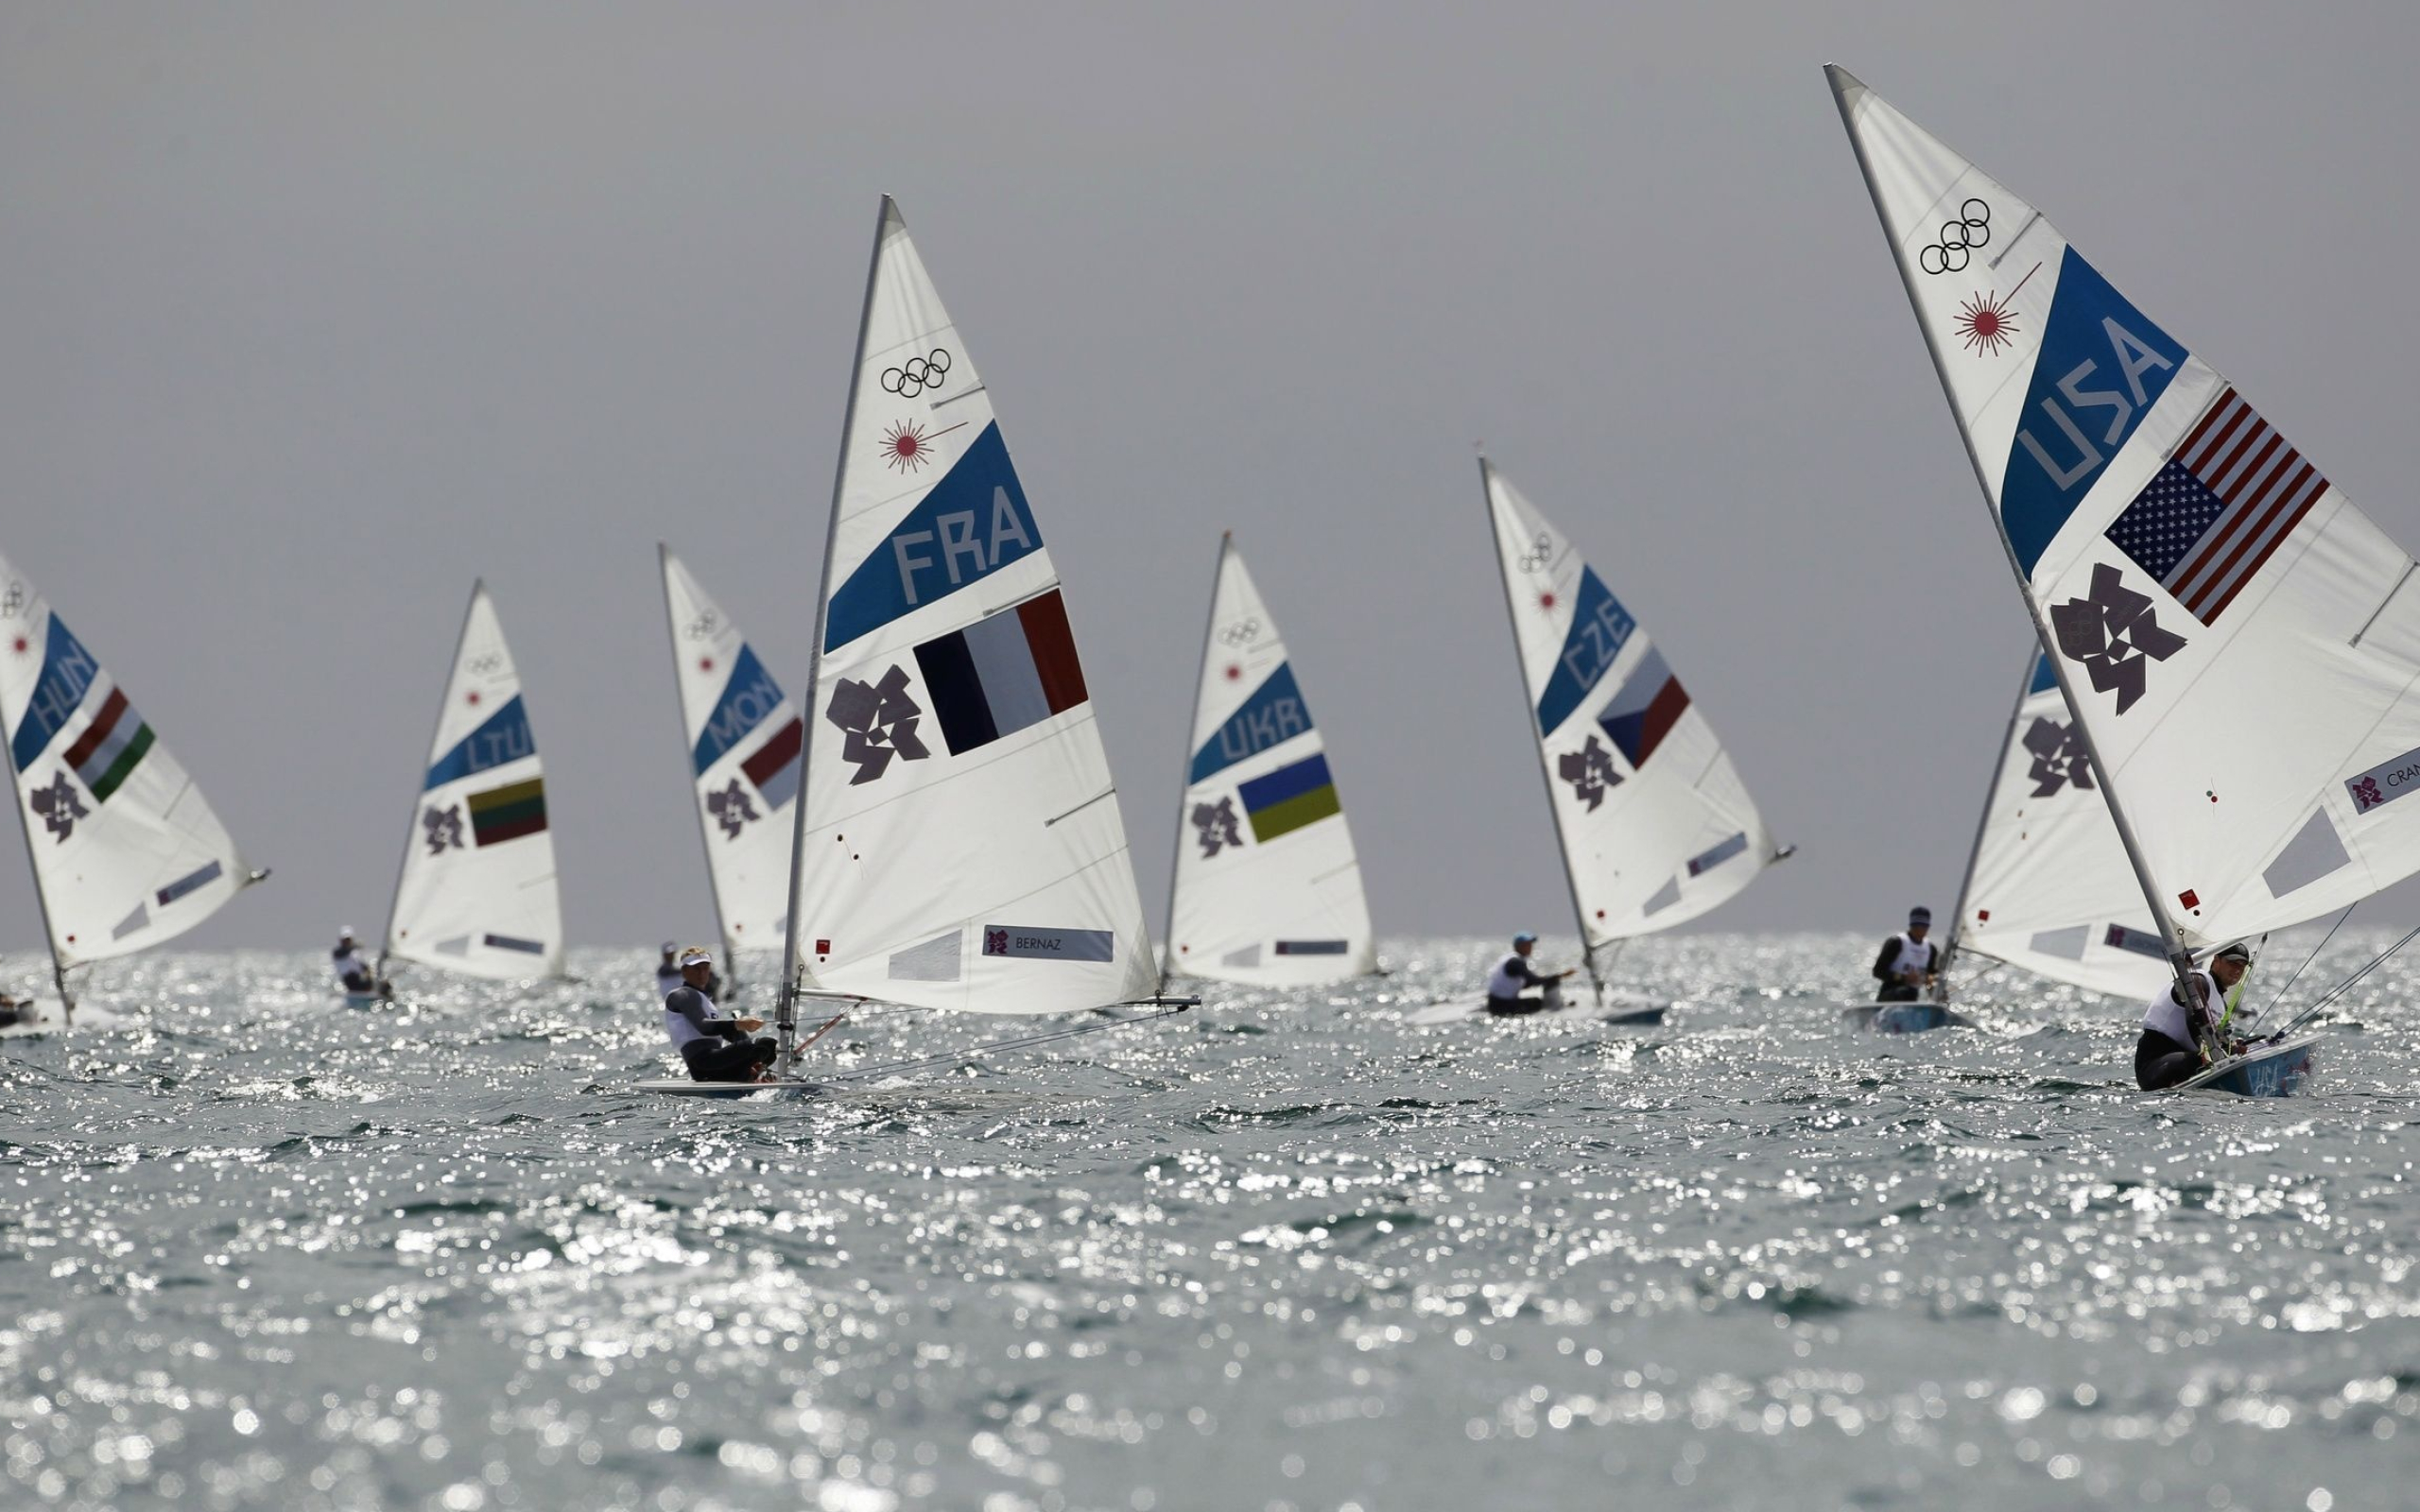 Sailing: Summer Olympics 2012, Windsports, Dinghy sailing, Boat racing. 2560x1600 HD Wallpaper.